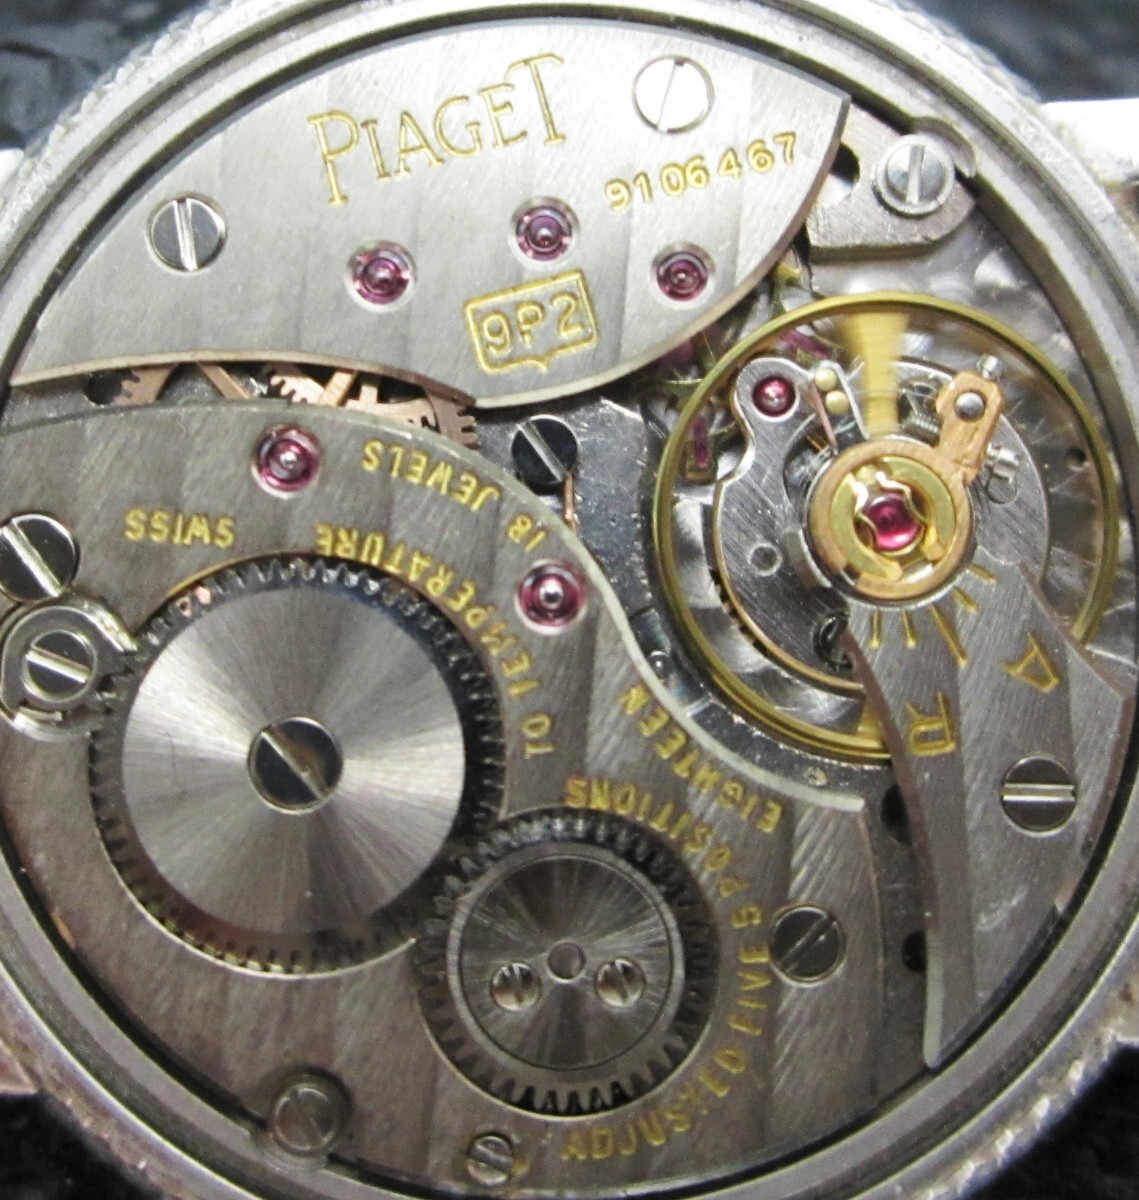 K18WG 金無垢 ピアジェ PIAGET 手巻き ピアジェ純正K18尾掟装着 腕時計の画像10